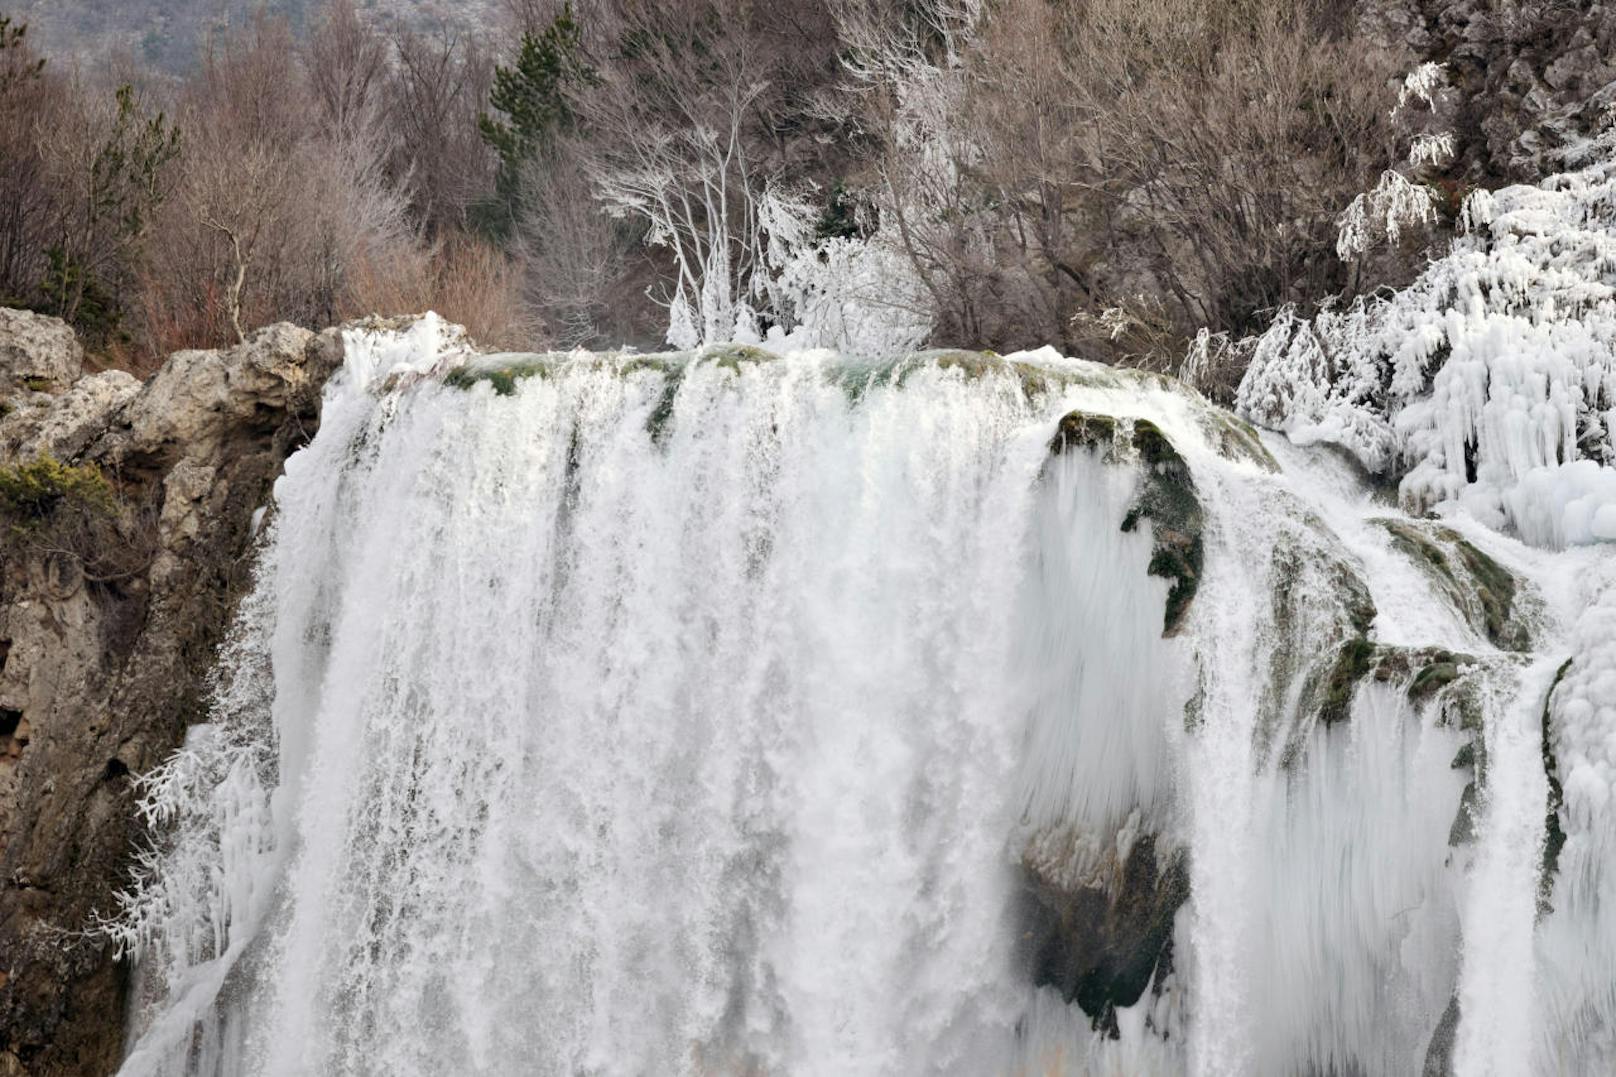 Eisige Temperaturen und heftige Windböen ließen den 22 meter hohen Wasserfall Krcic in Kroatien komplett vereisen.